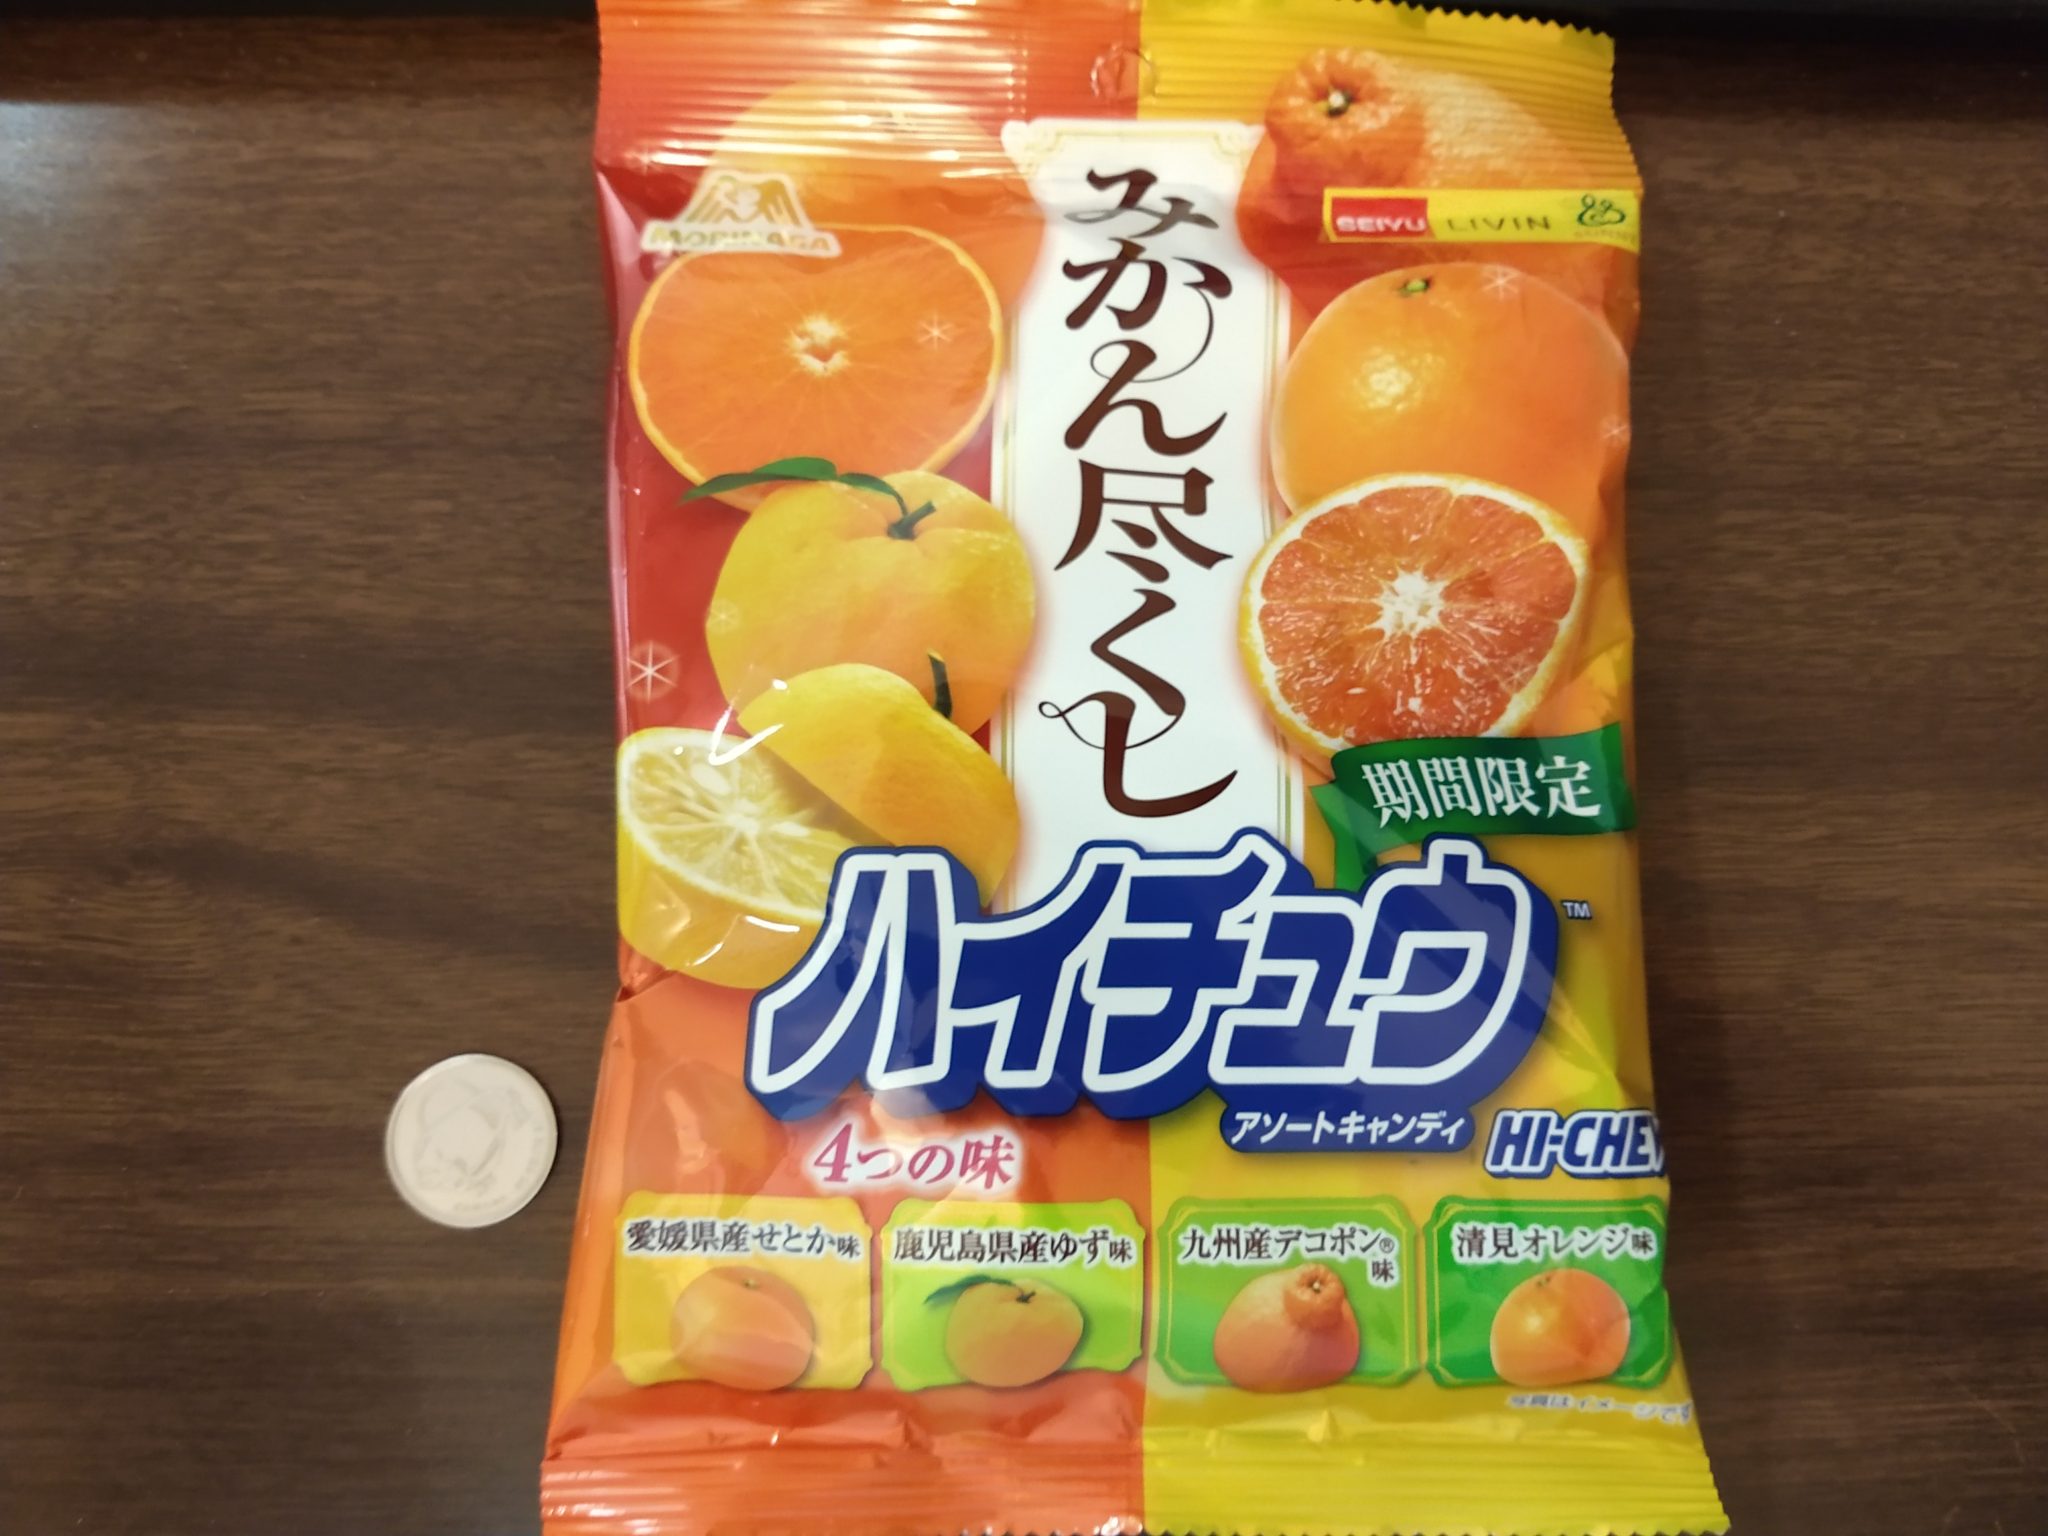 Hi-Chew – 4 Orange Variety